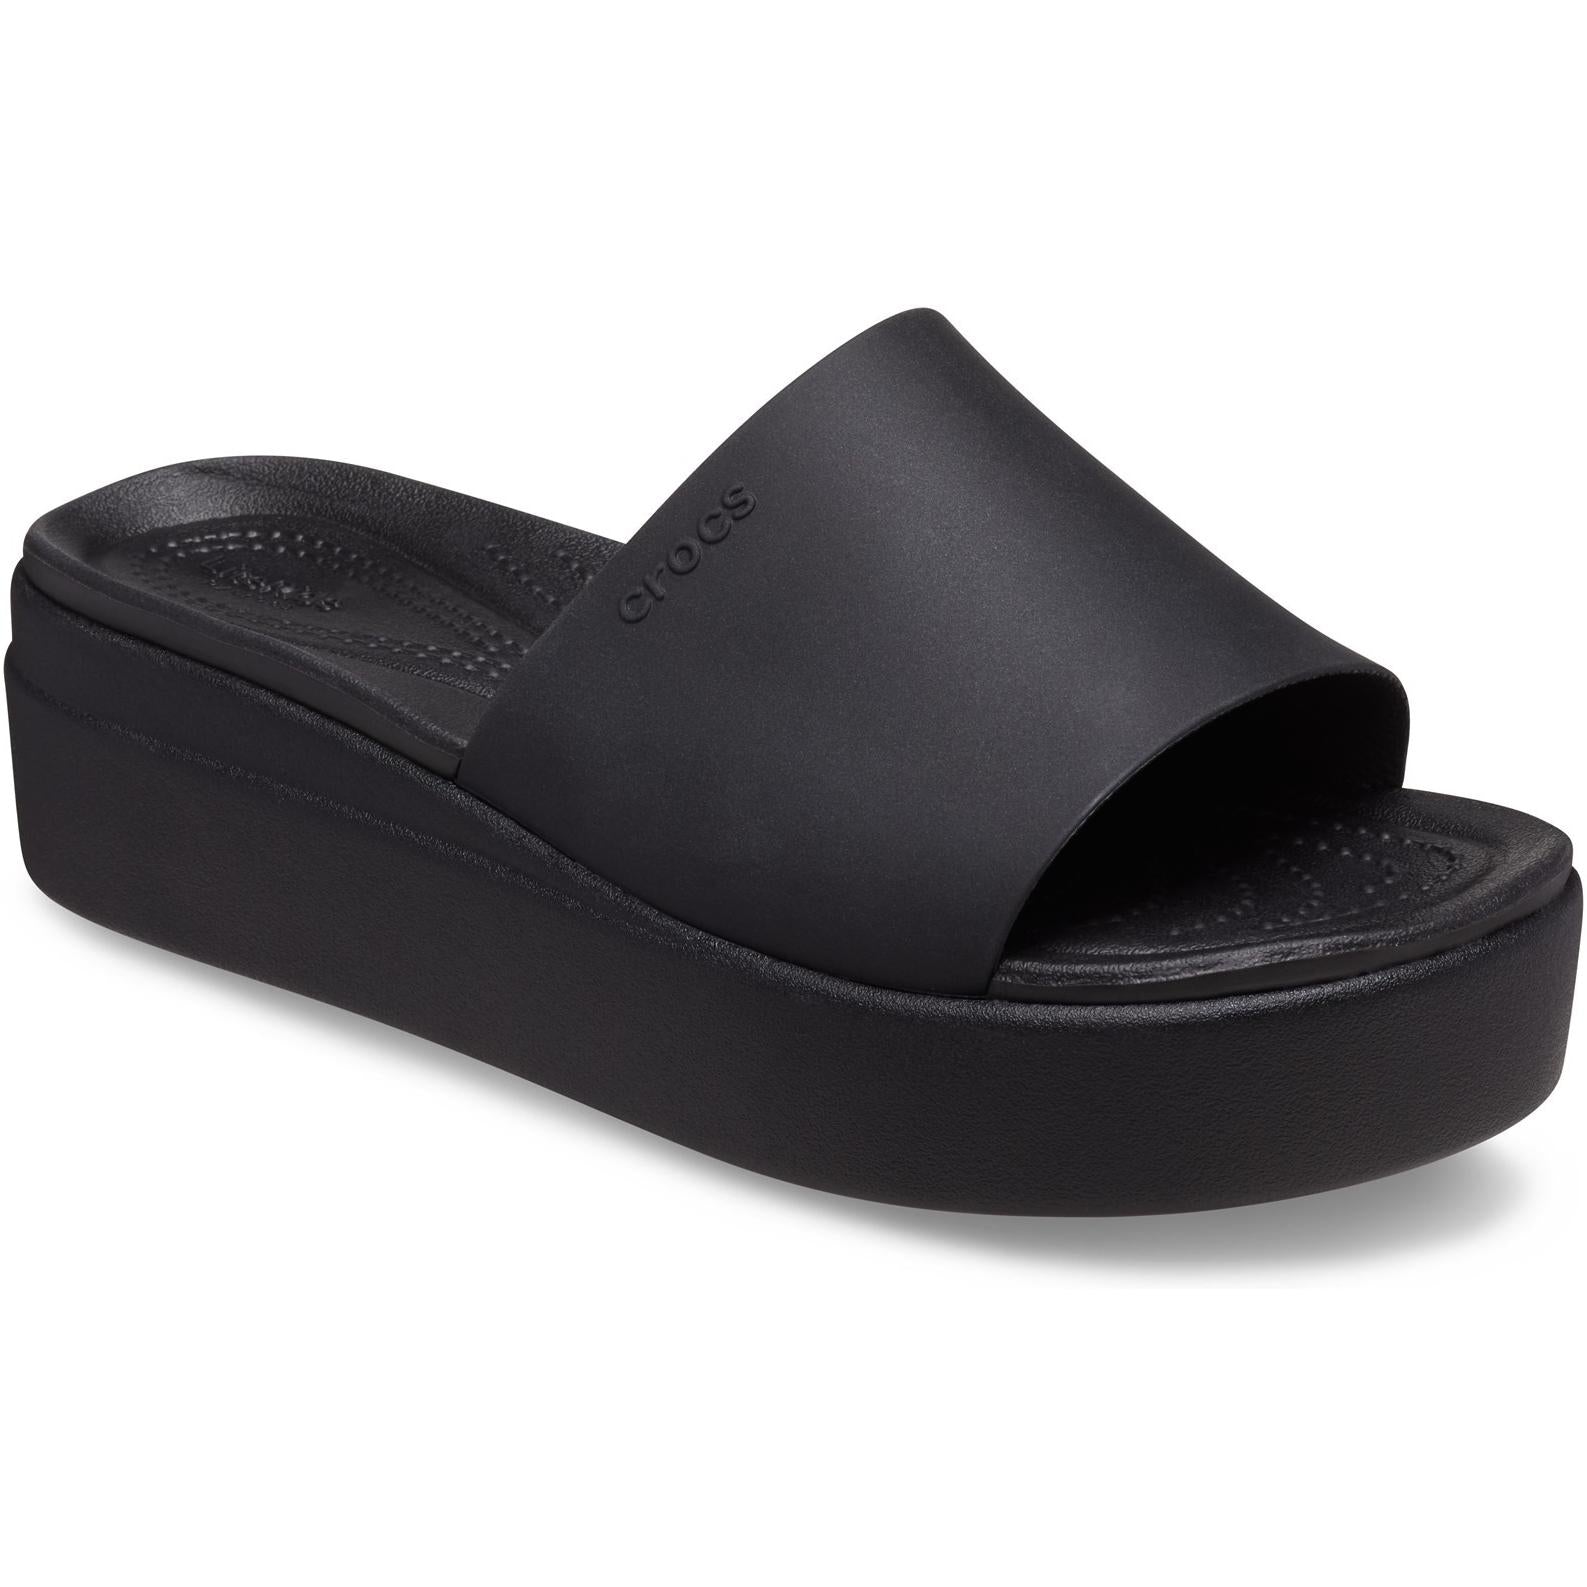 Crocs Brooklyn Slide Sandals